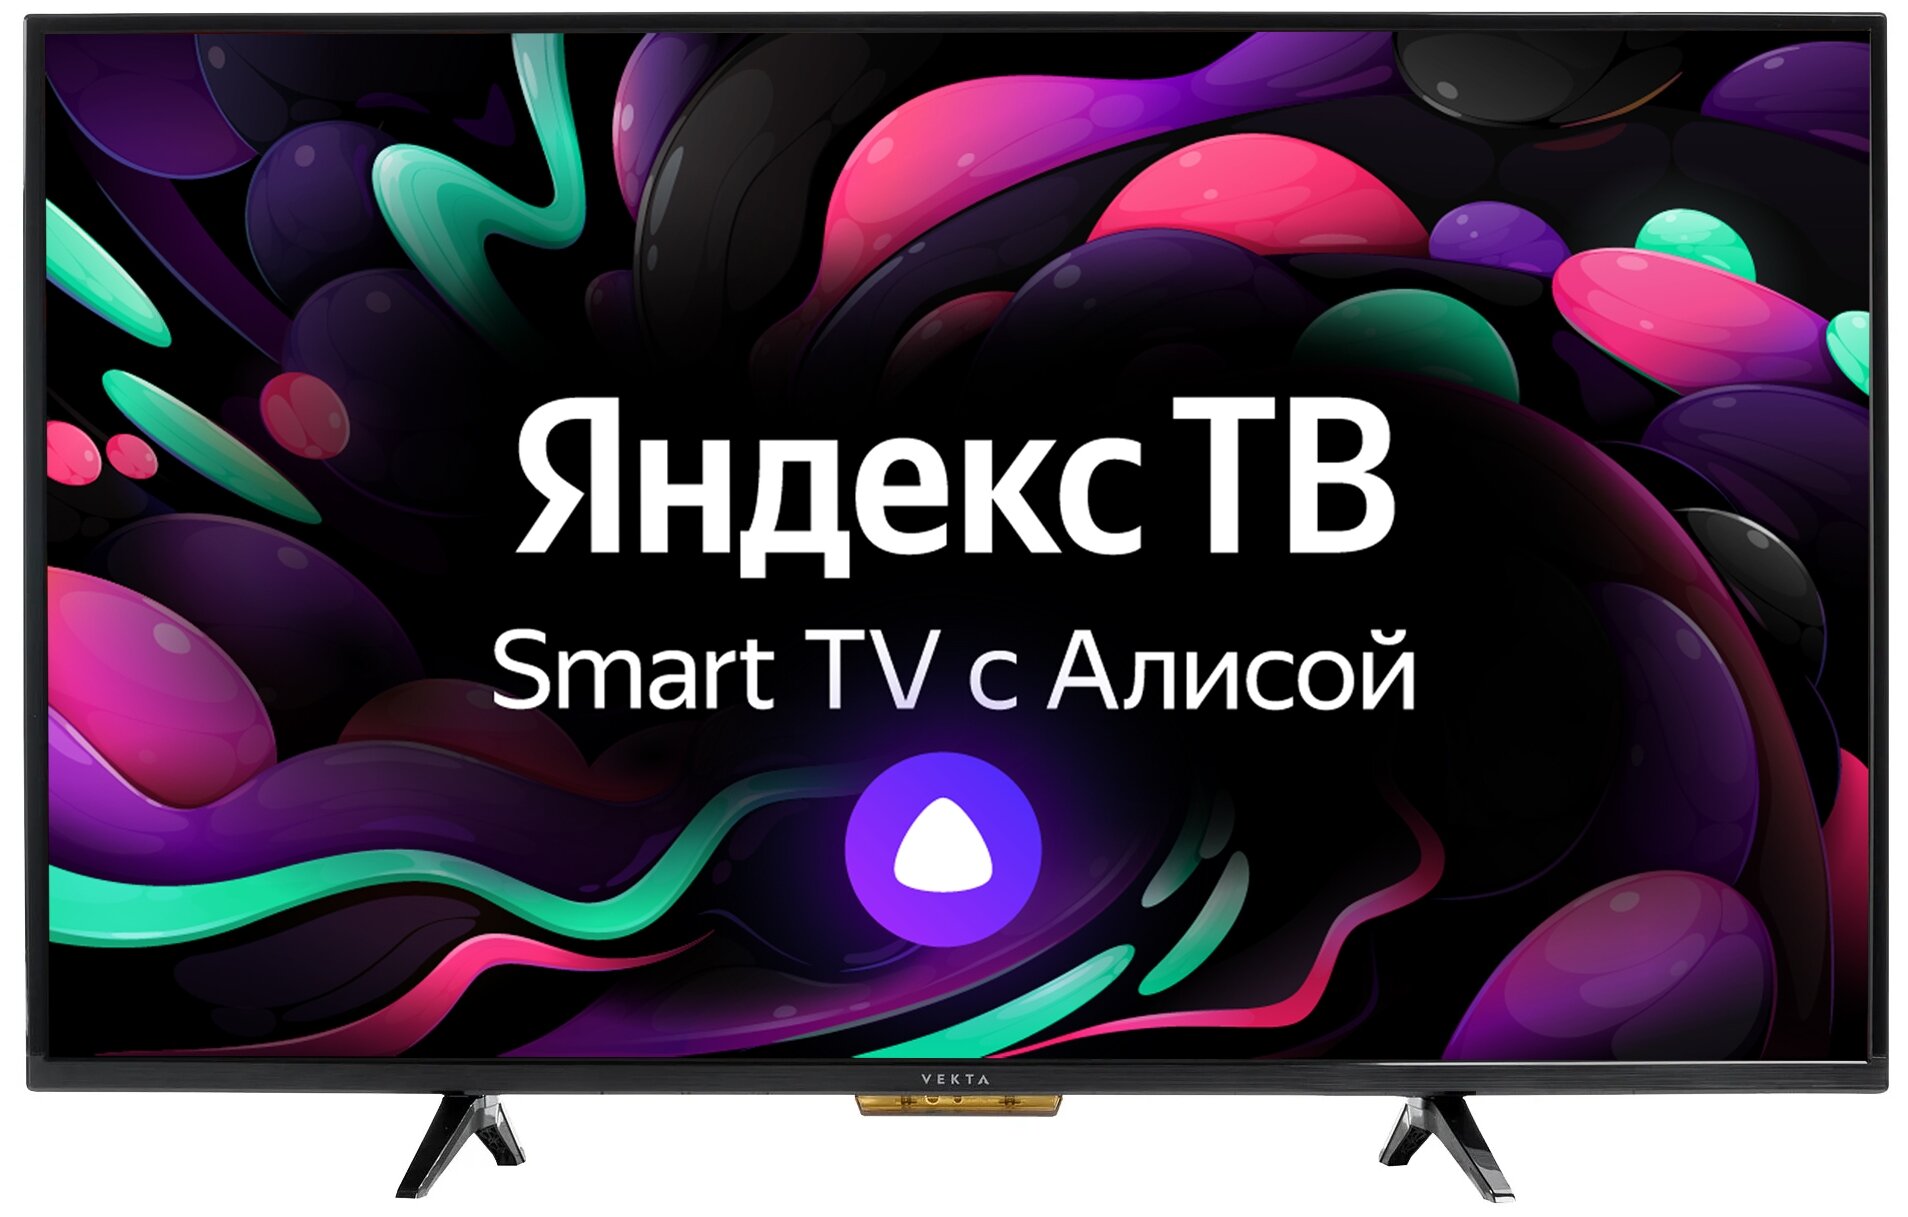 LED-Телевизор VEKTA LD-43SF4815BS Smart TV